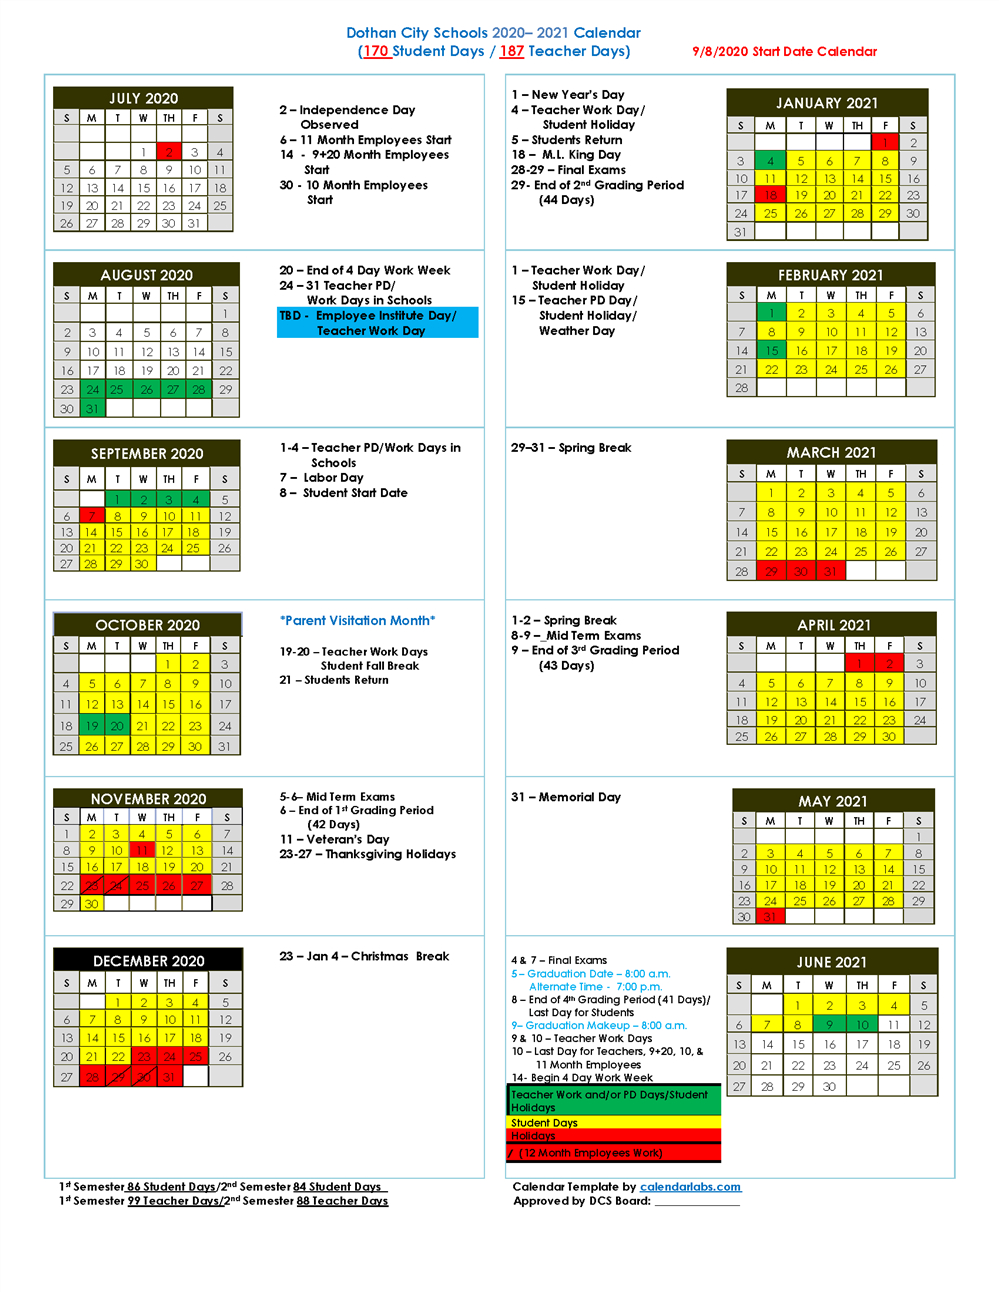 Dothan City Schools Calendar 2021 2022 | Calendar 2021